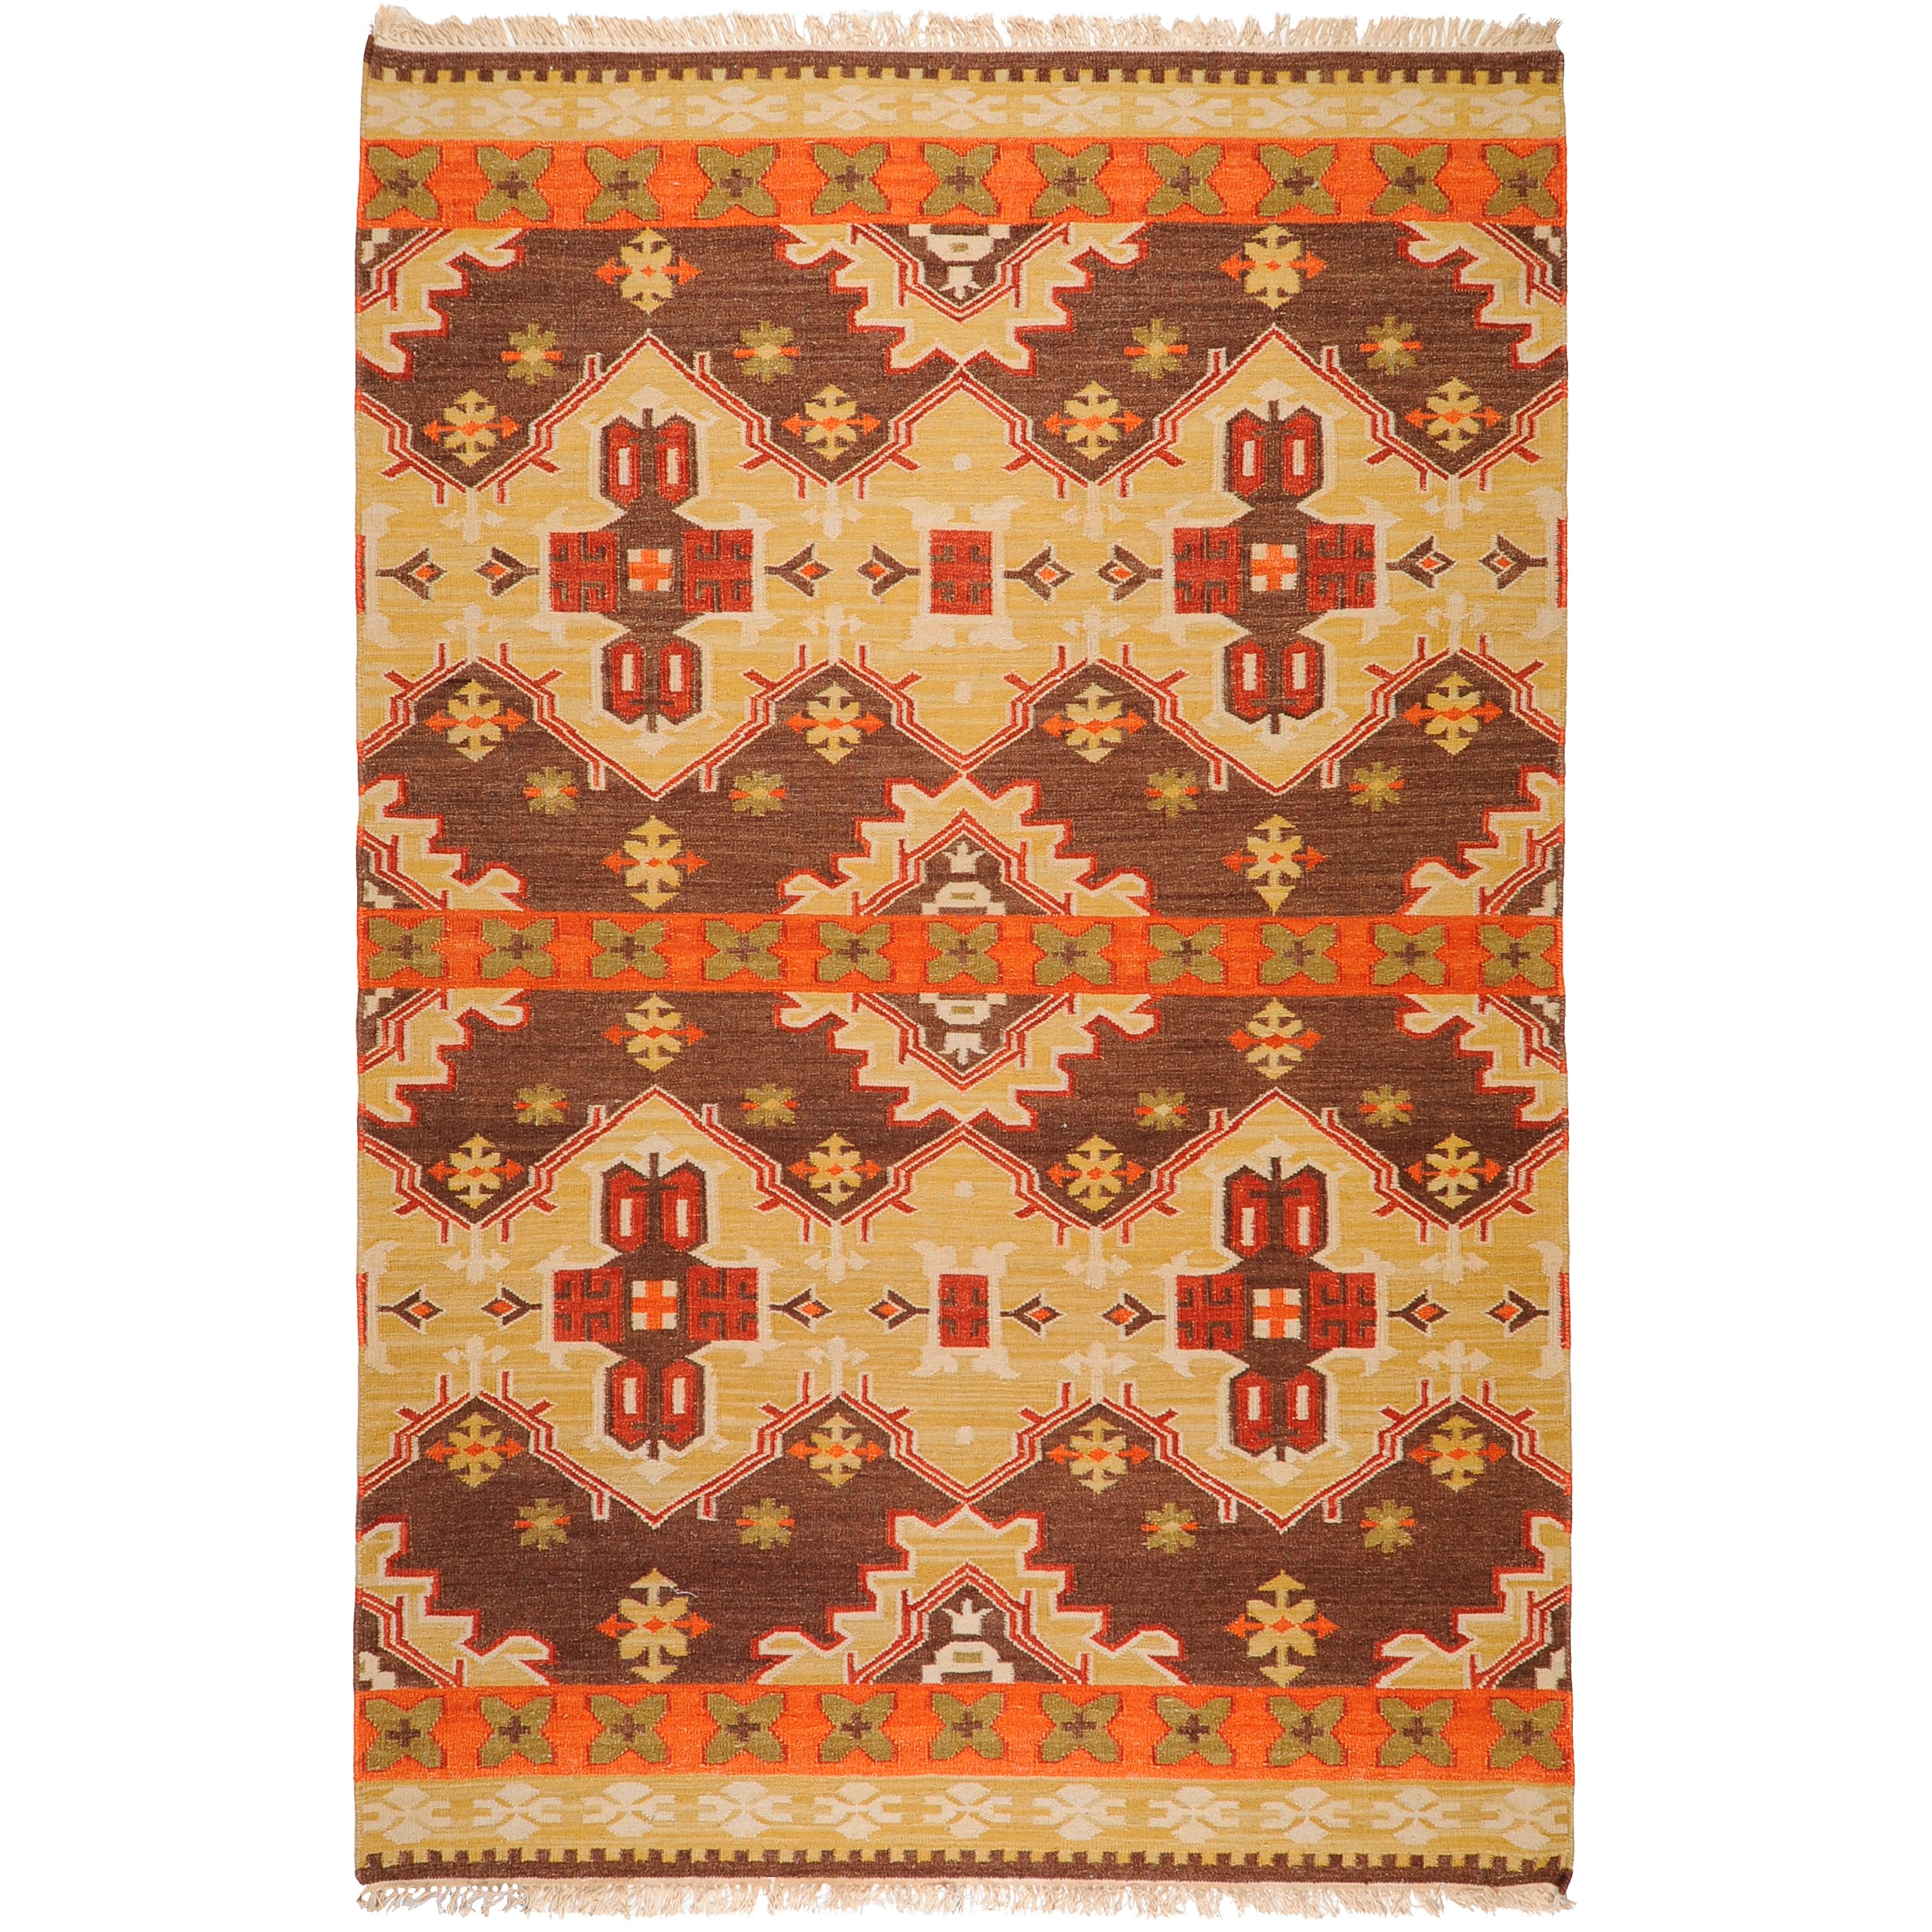 Hand woven Orange/brown Southwestern Aztec Keizer Hard Twist Wool Rug (2 X 3)